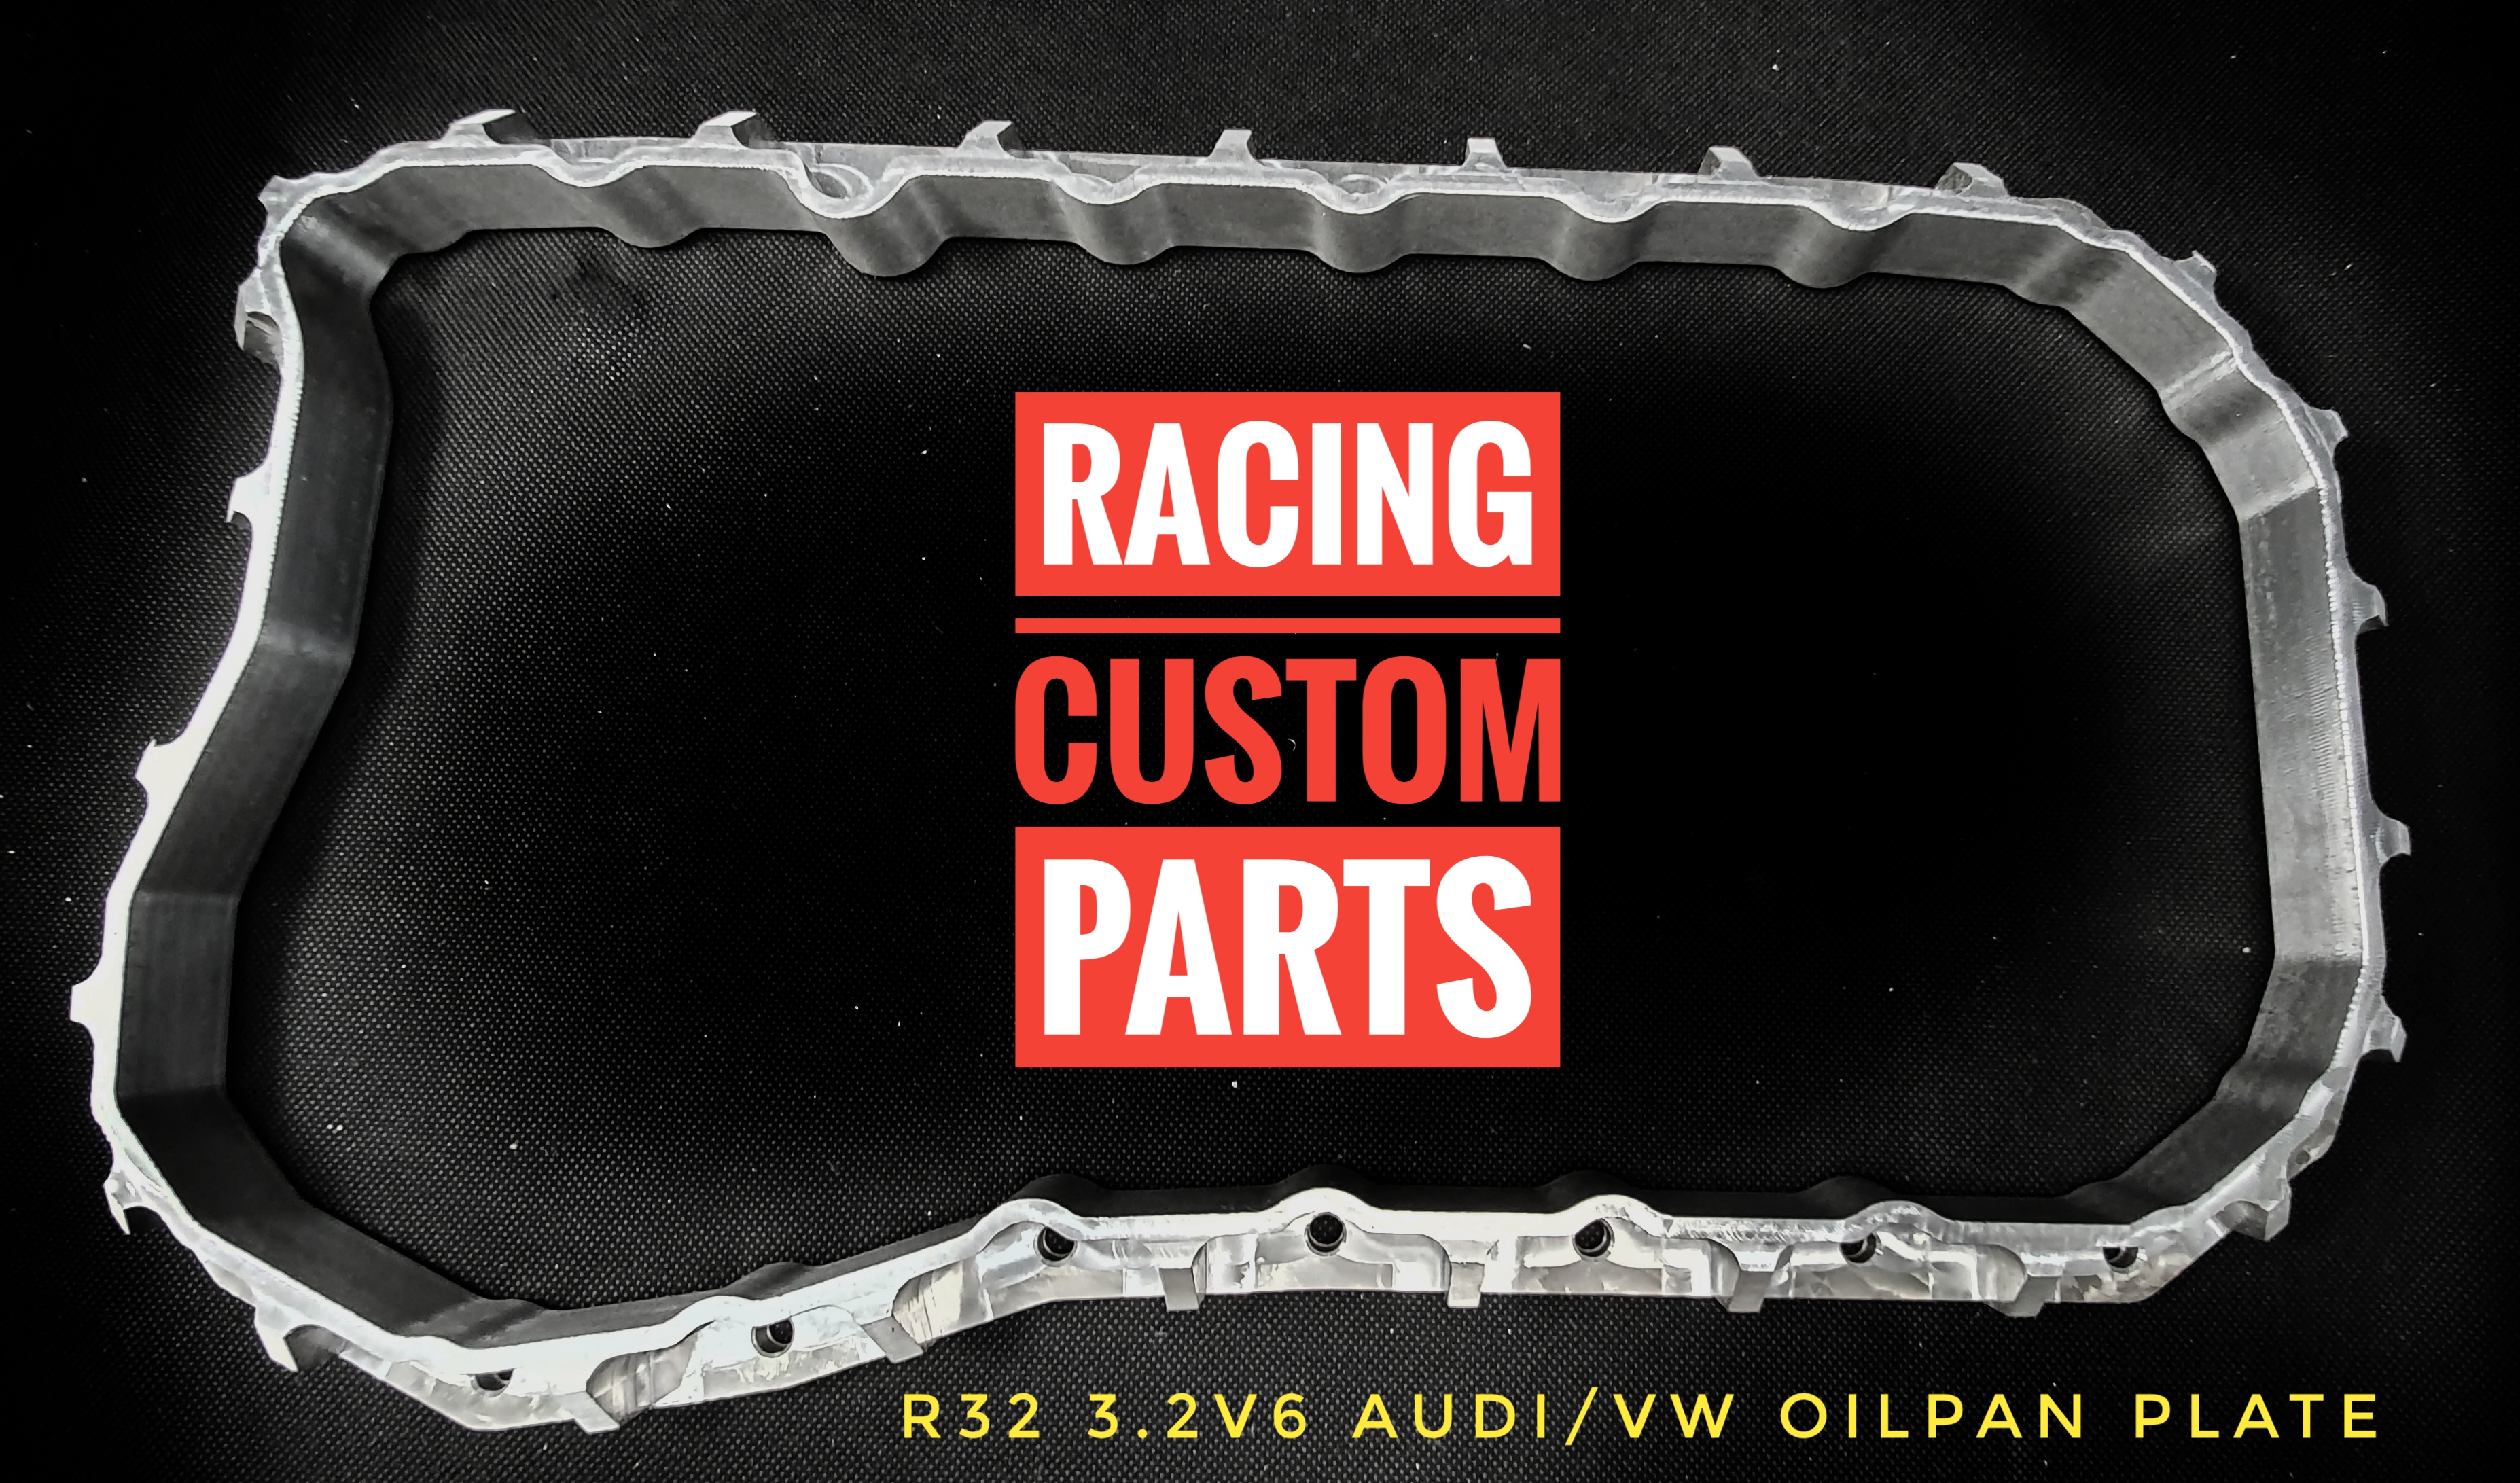 r32 oil pan billet plate racing custom barts r32 turbo audi vw billet cnc